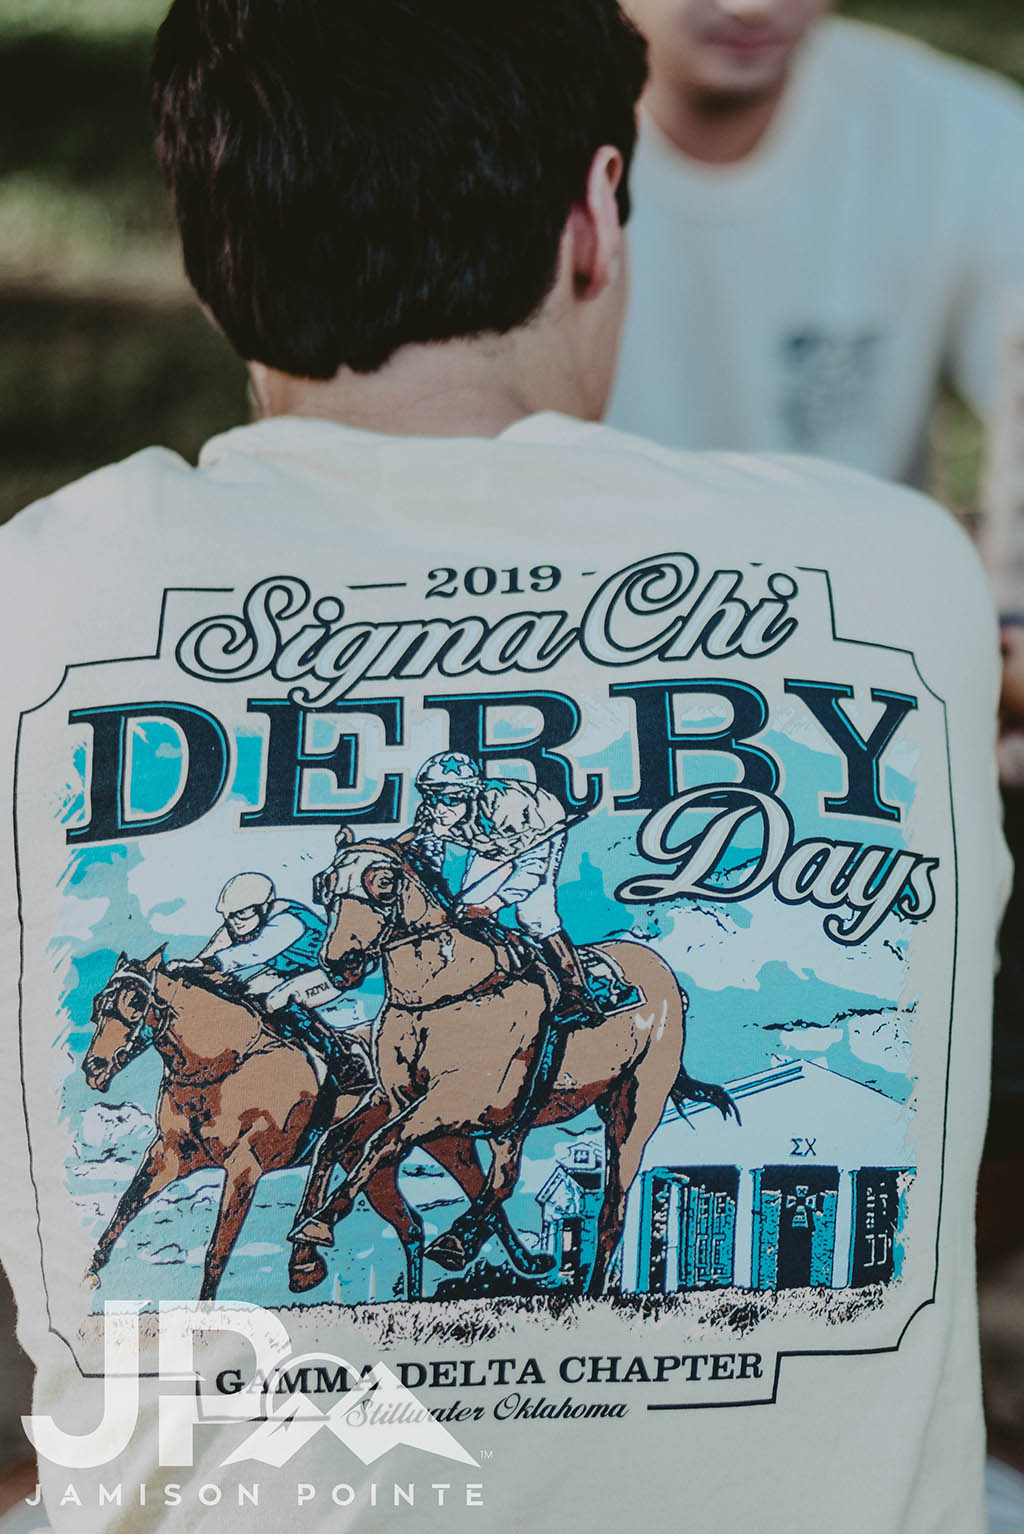 Sigma Chi Philanthropy Derby Days Racing Tee